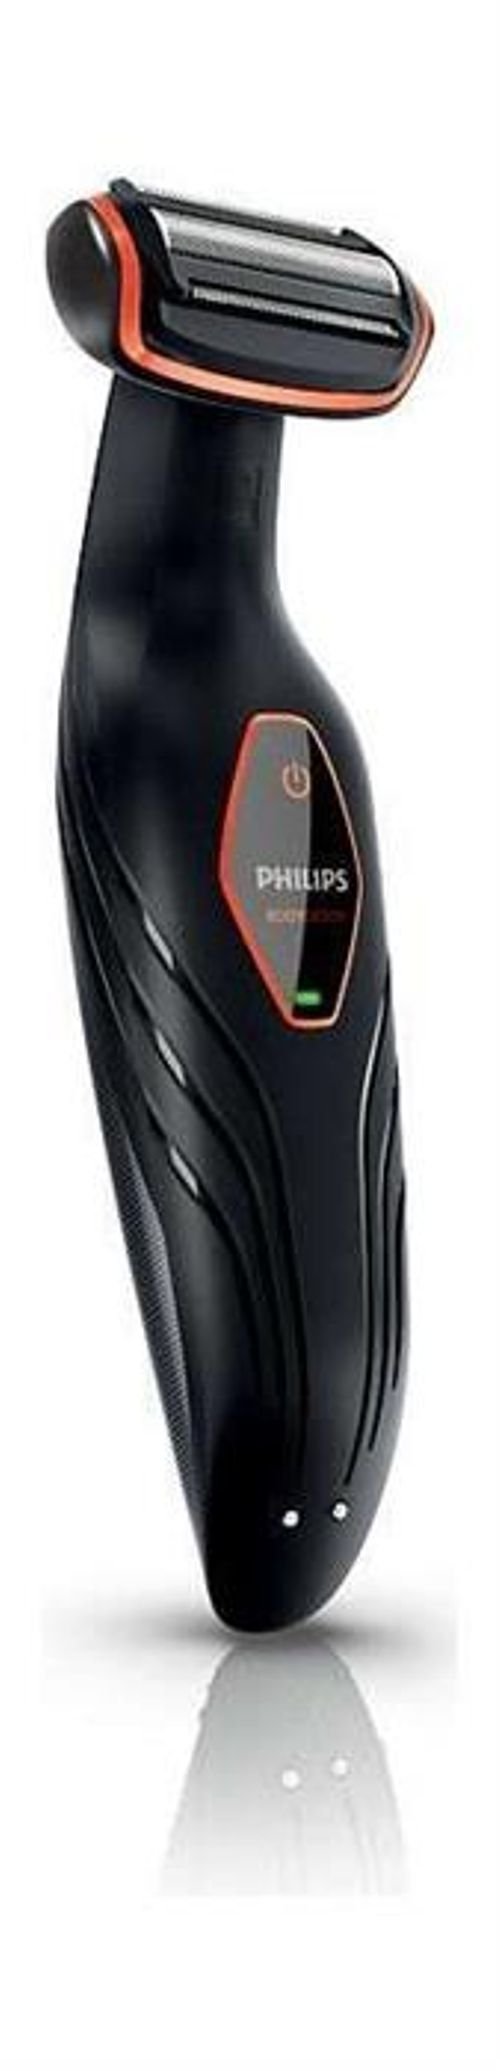 Philips Body Groomer + Philips Beard - QT4005/13 + BG2024/15 